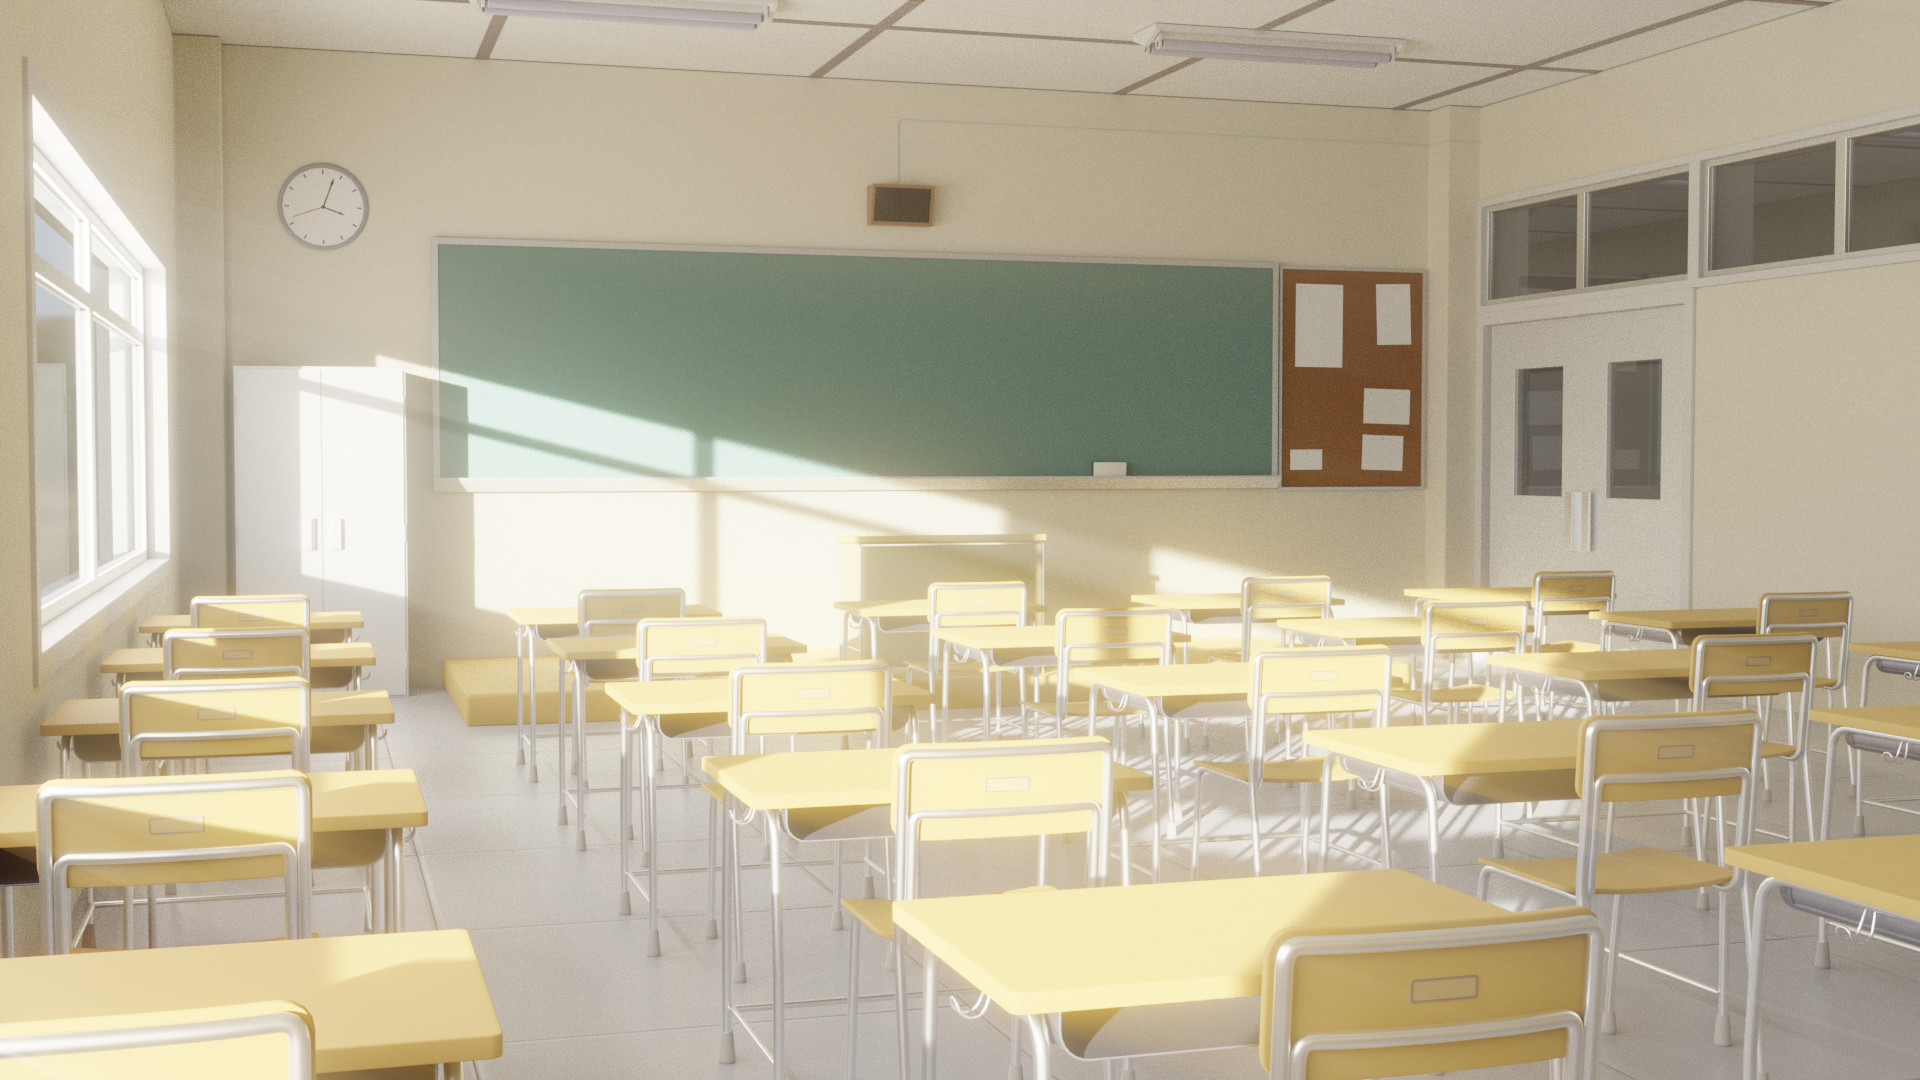 Classroom 𝒐𝒇 𝑨𝒏𝒊𝒎𝒆 added a new photo. - Classroom 𝒐𝒇 𝑨𝒏𝒊𝒎𝒆